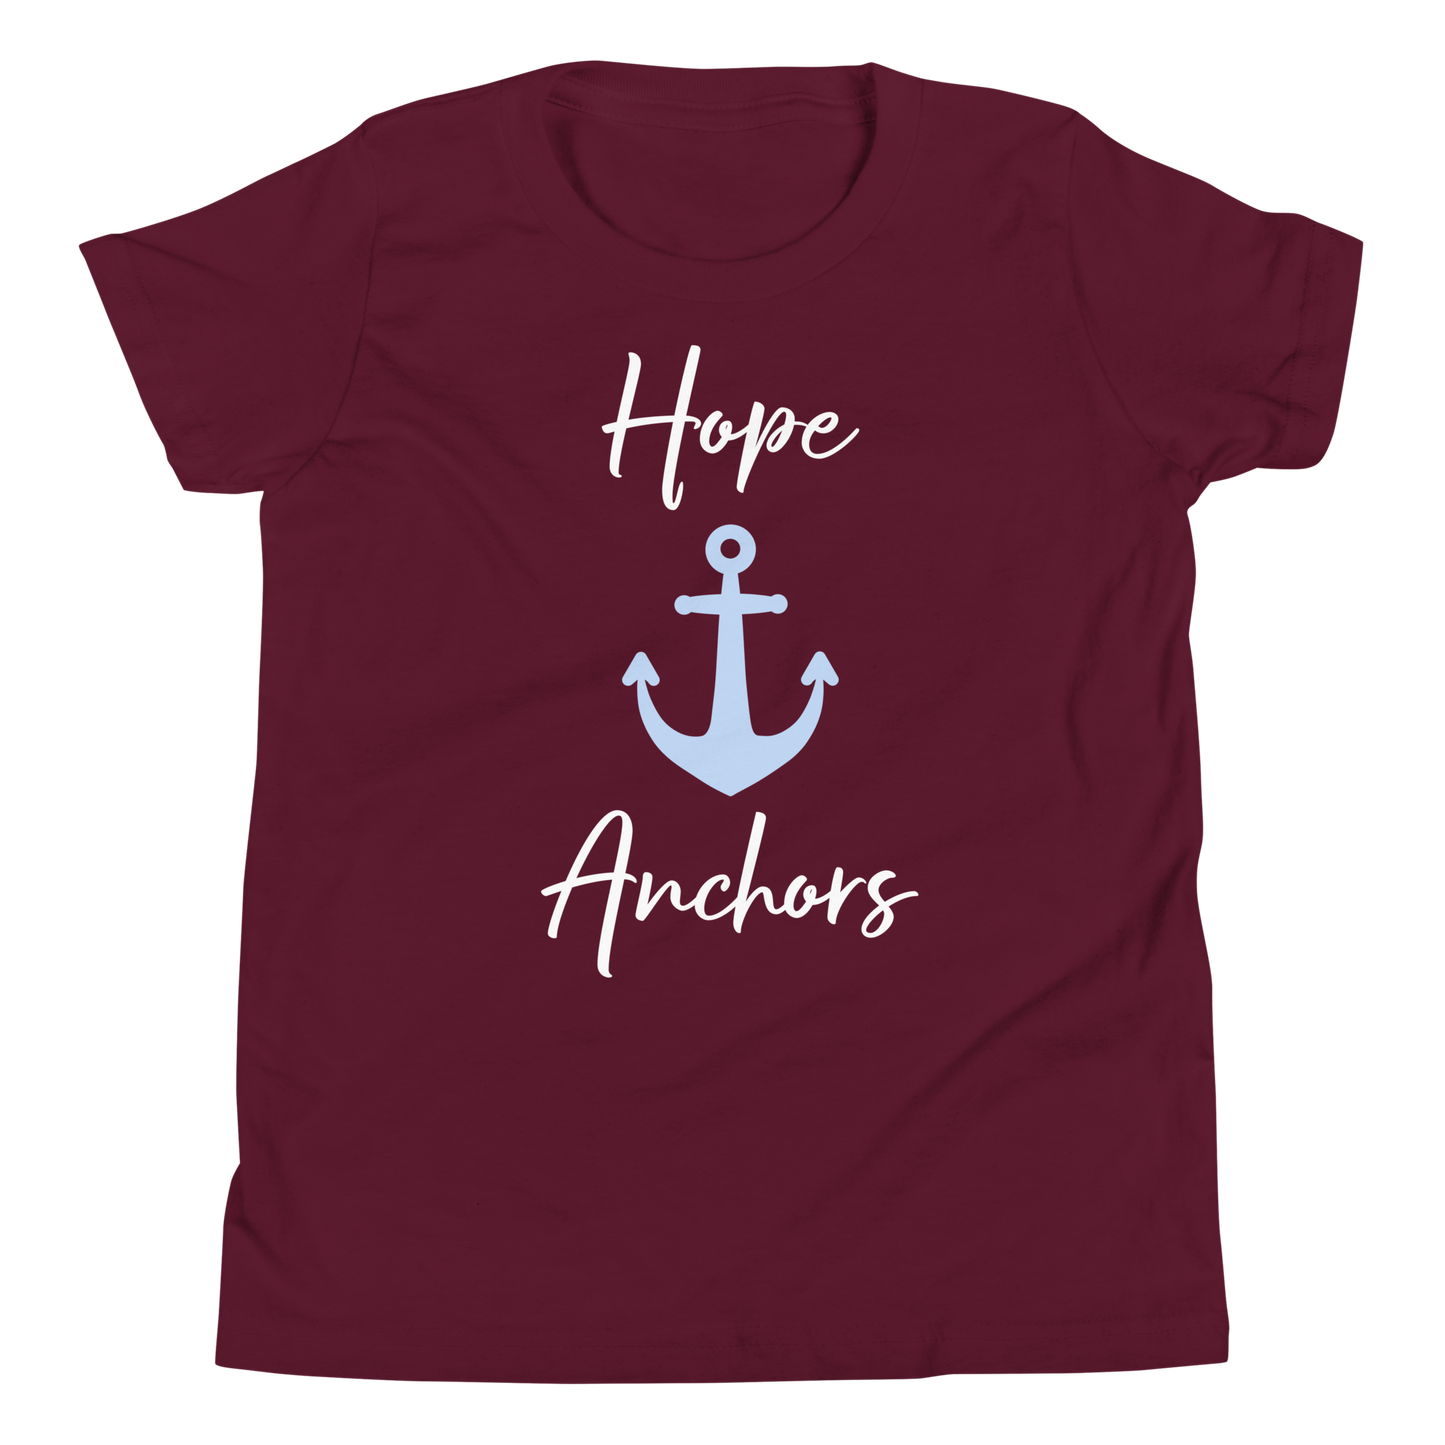 Hope Anchors - Youth Short Sleeve T-Shirt